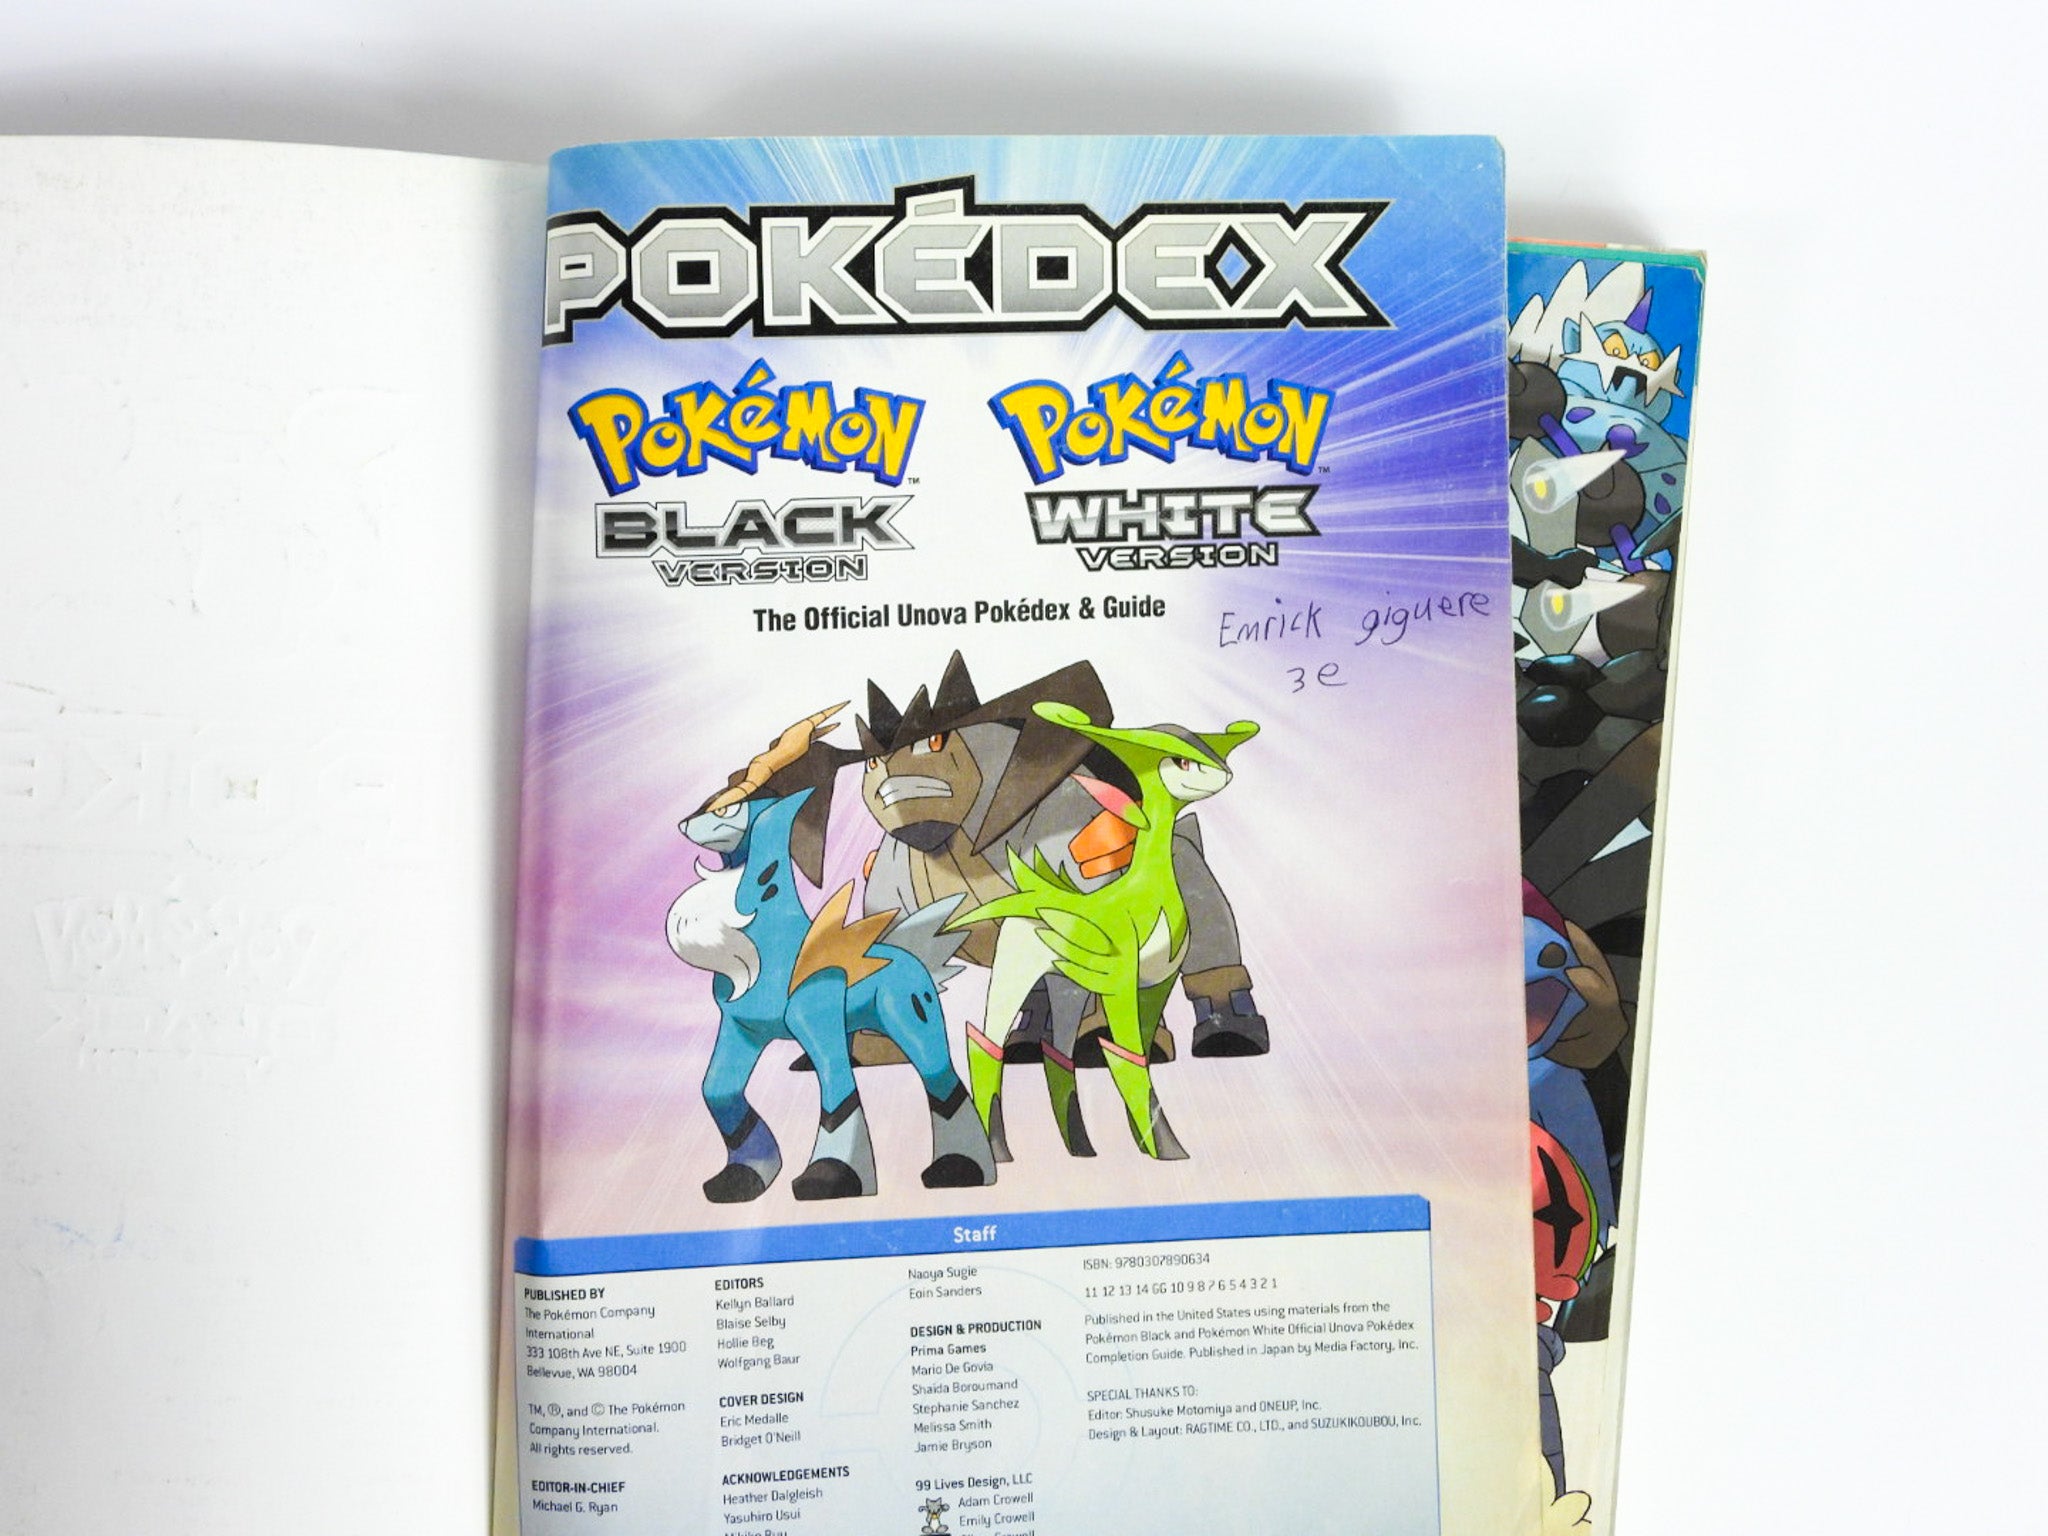 Pokemon Black 2 & White 2 Official Pokedex and Guide Volume 2